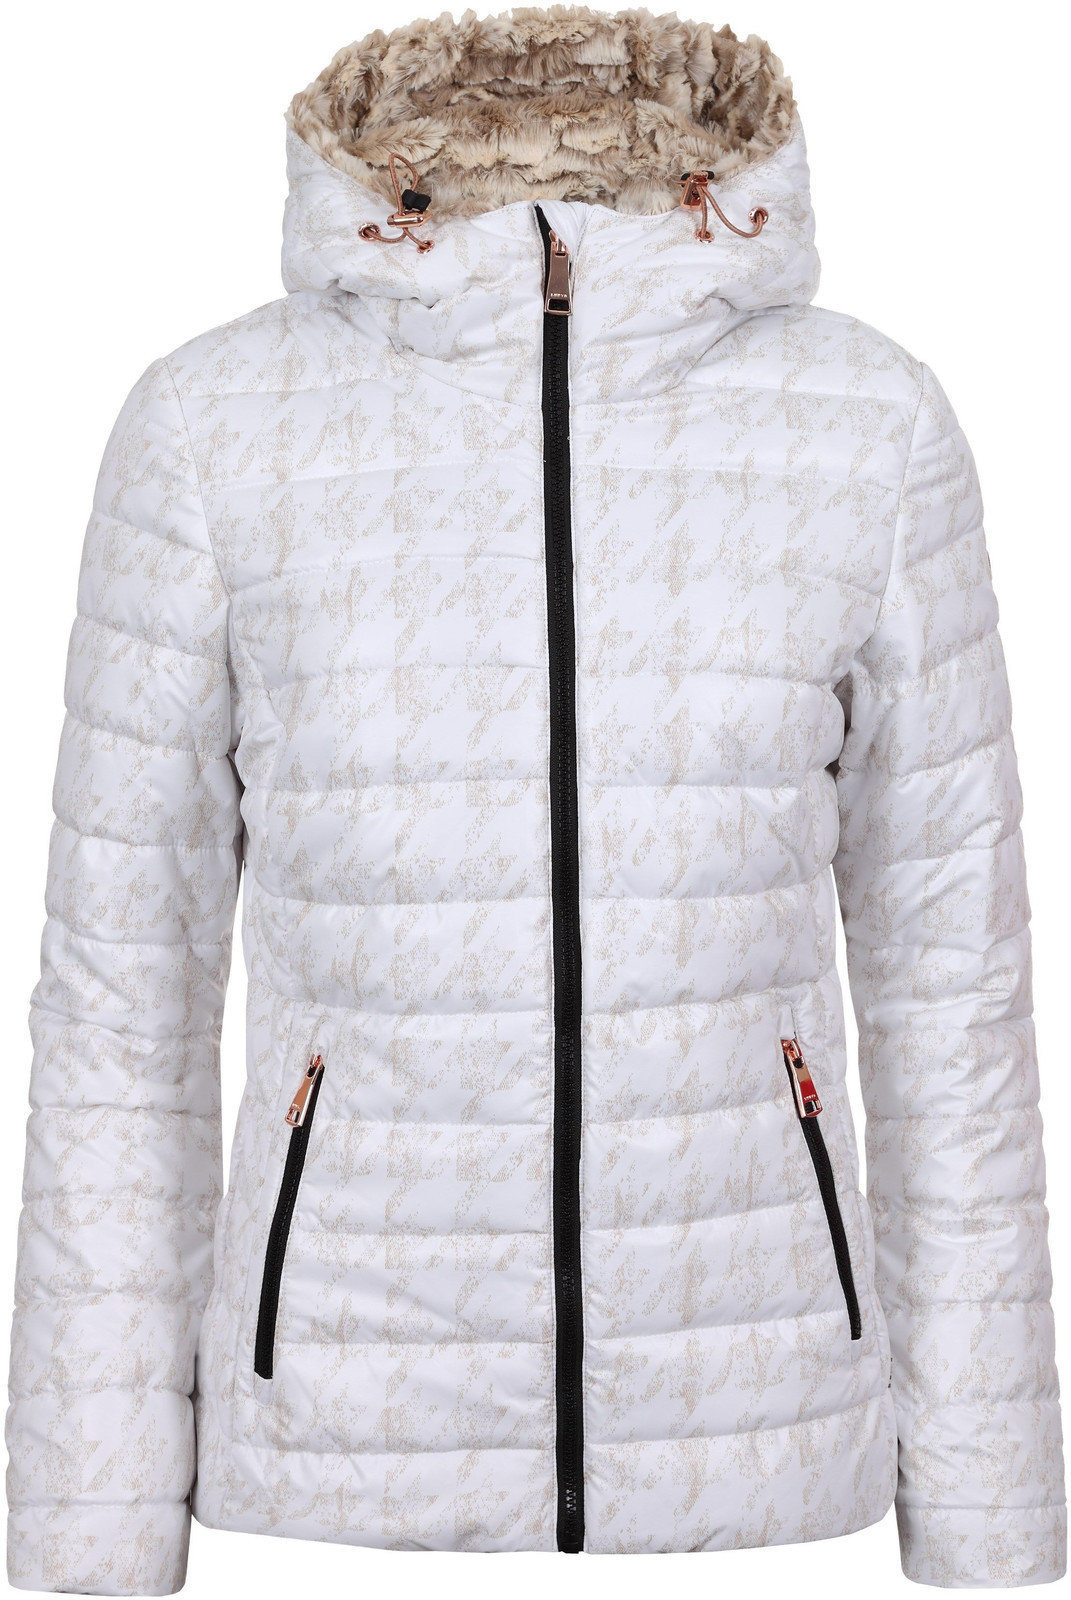 Ski Jacket Luhta Bettina Optic White 38